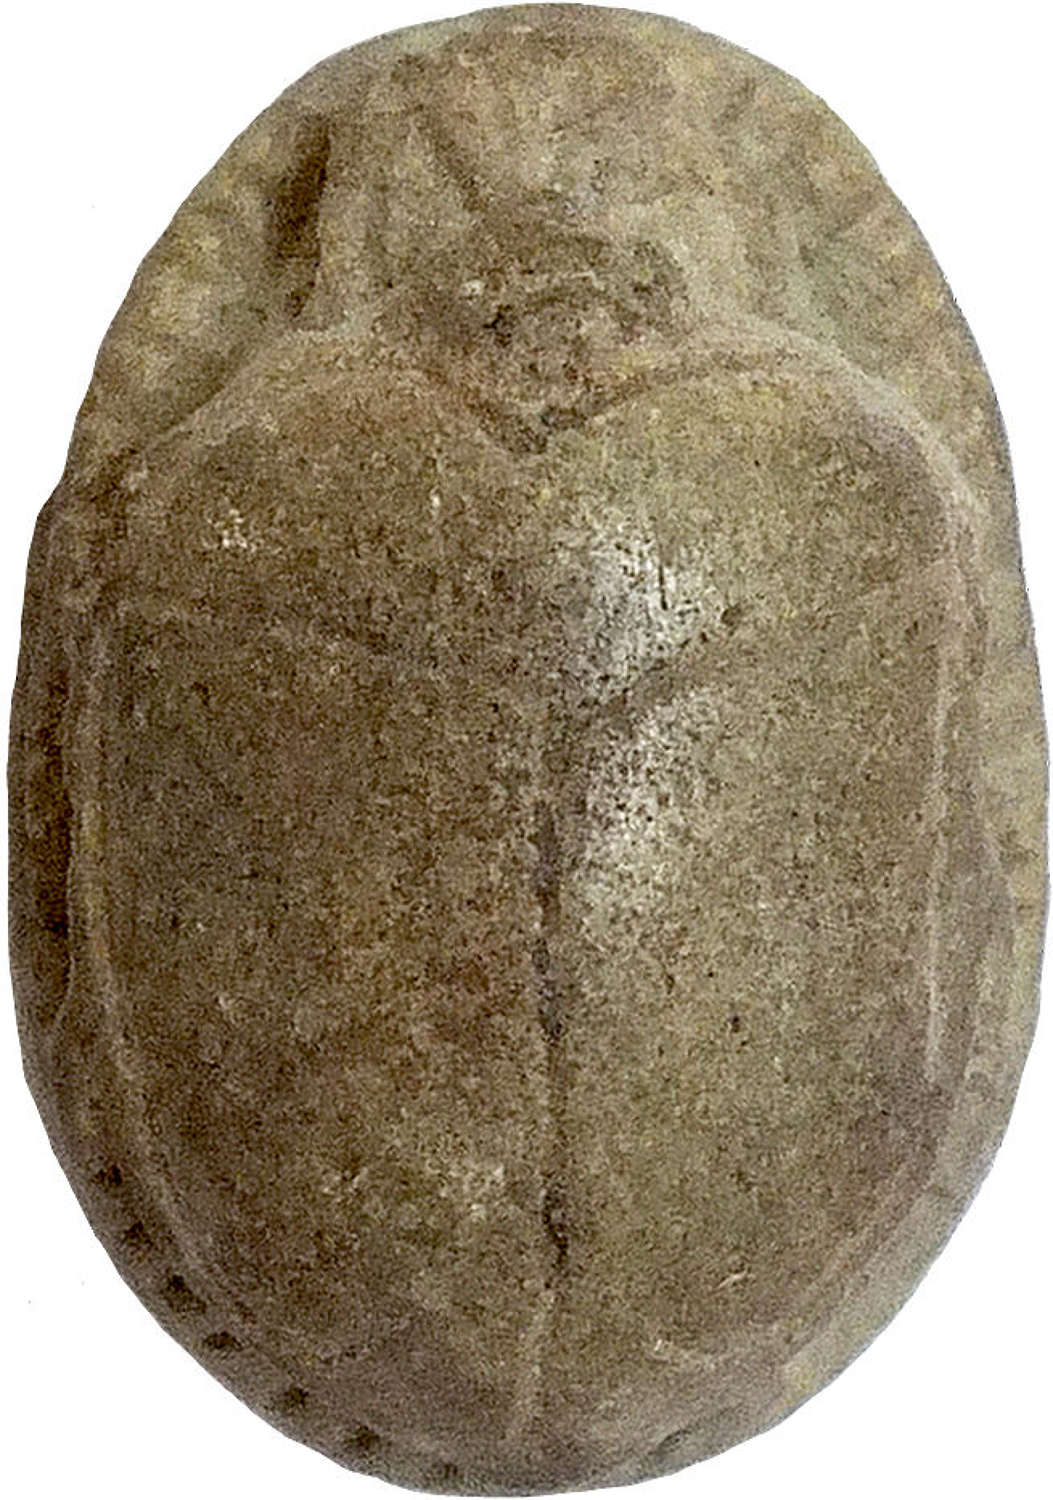 An Egyptian steatite scarab, c. 2nd Millennium B.C.